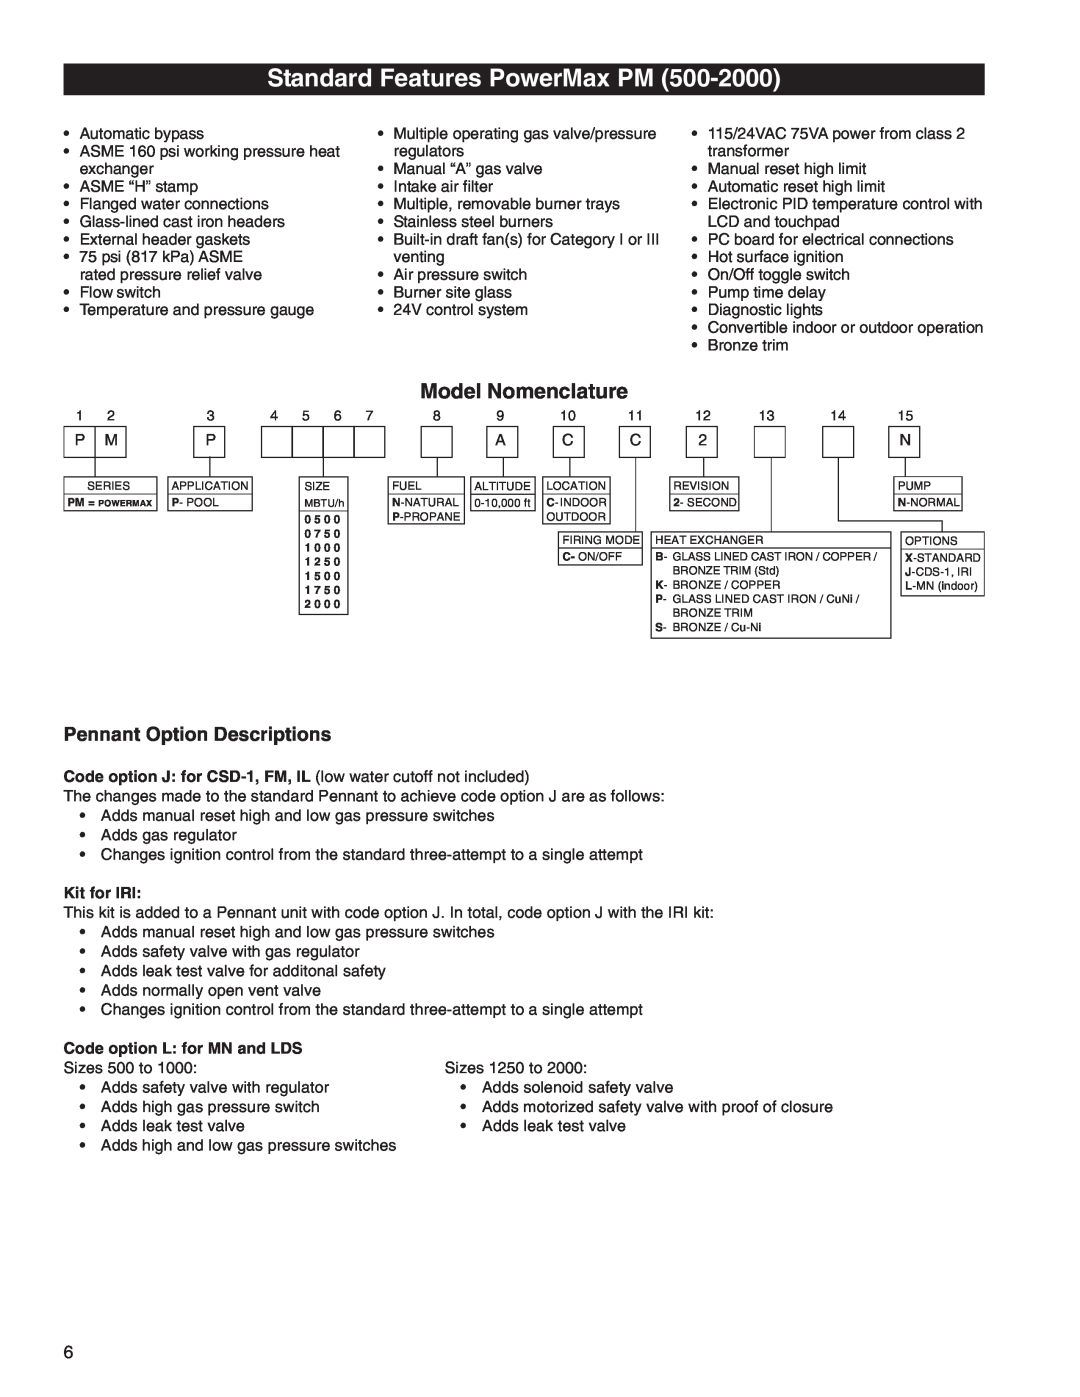 Pentair 472645 manual Standard Features PowerMax PM, Model Nomenclature, Pennant Option Descriptions, Kit for IRI 